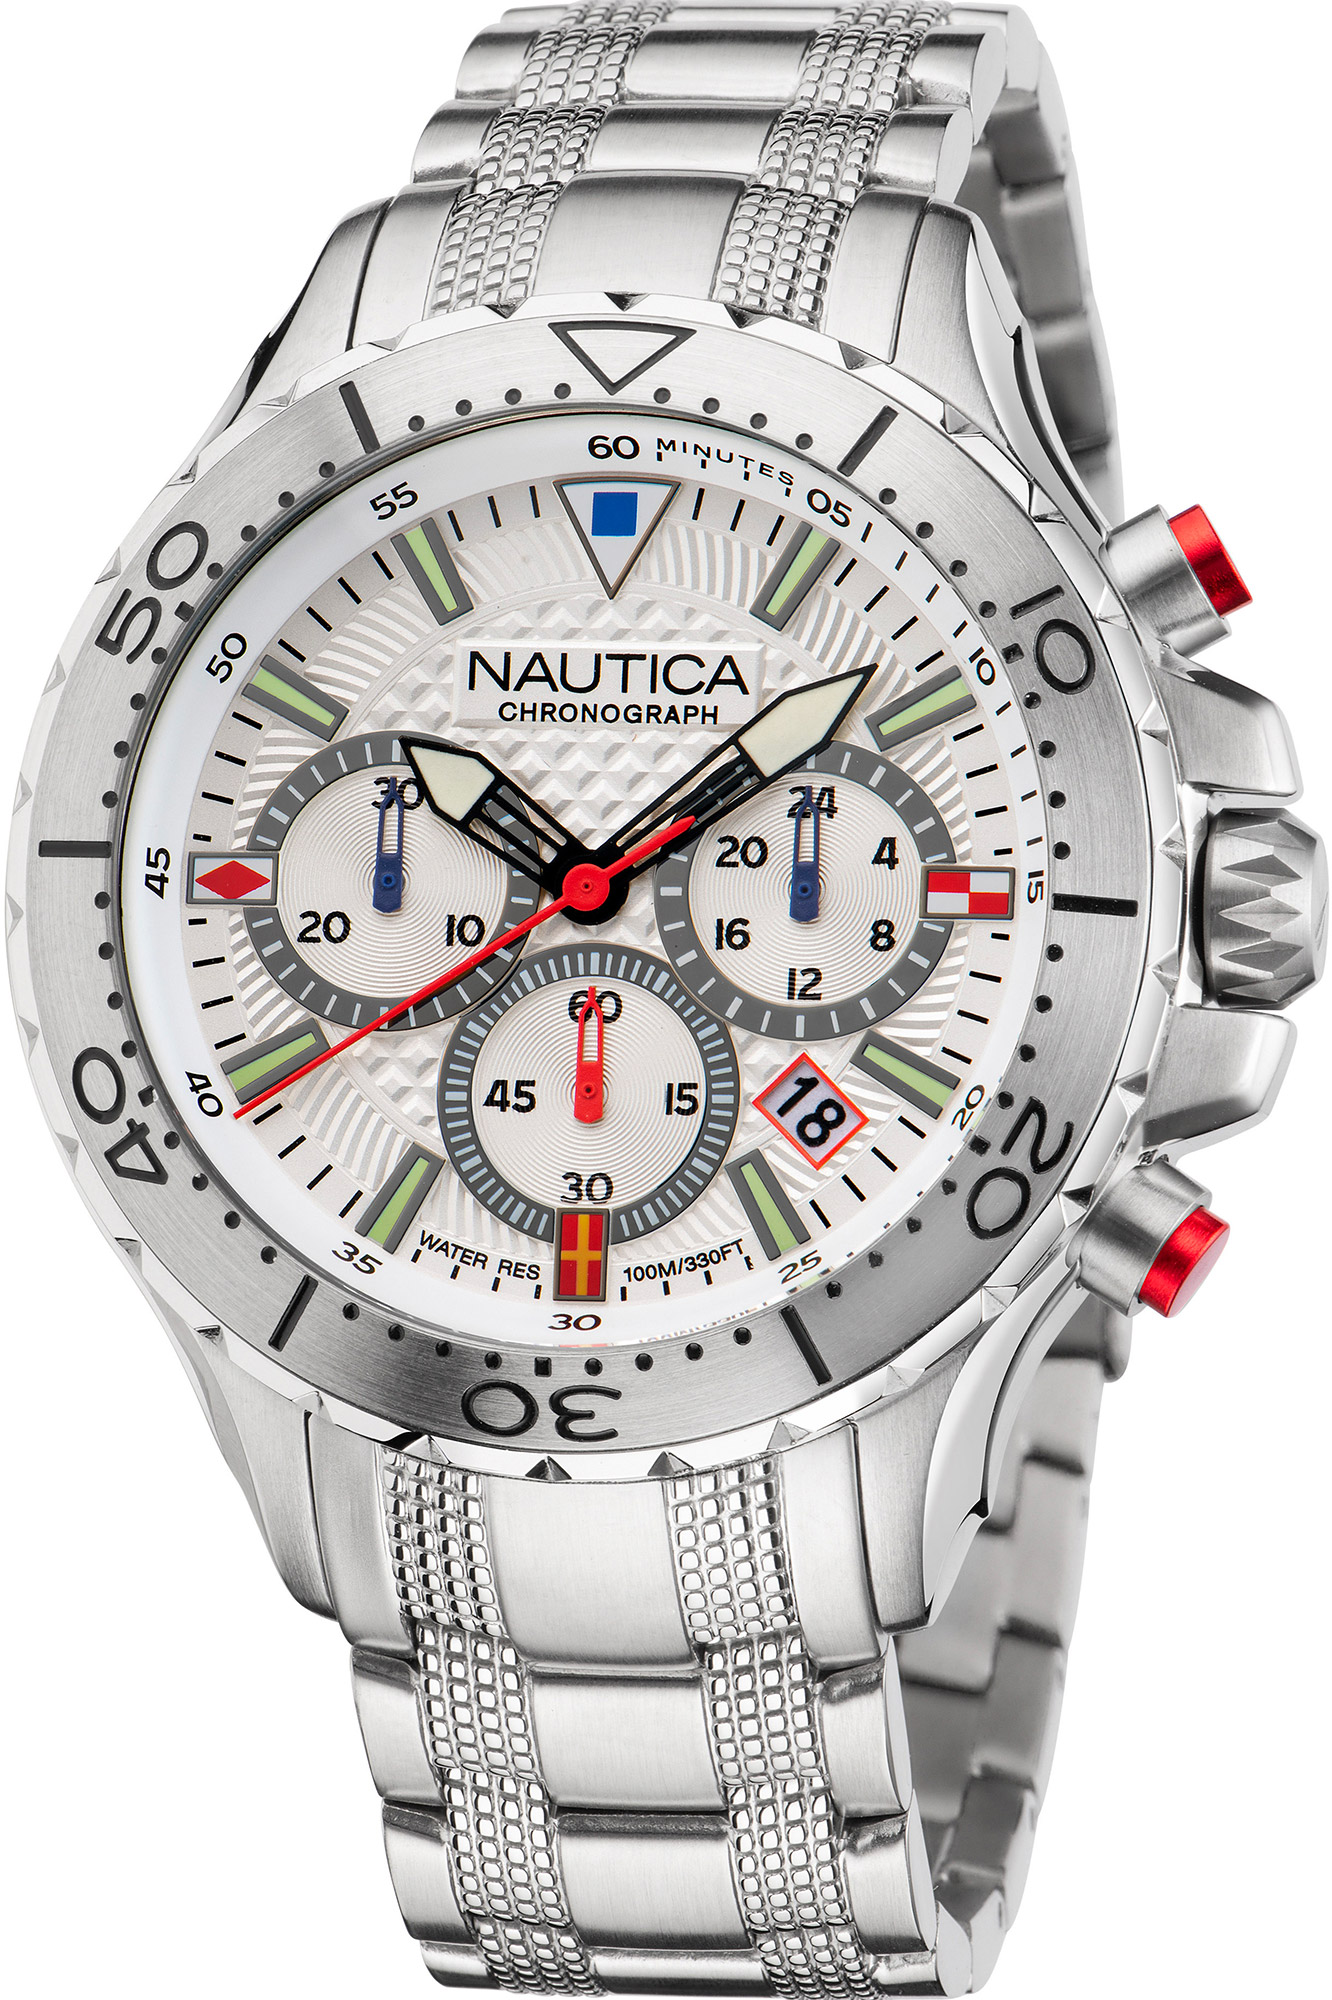 Watch Nautica napnsf205